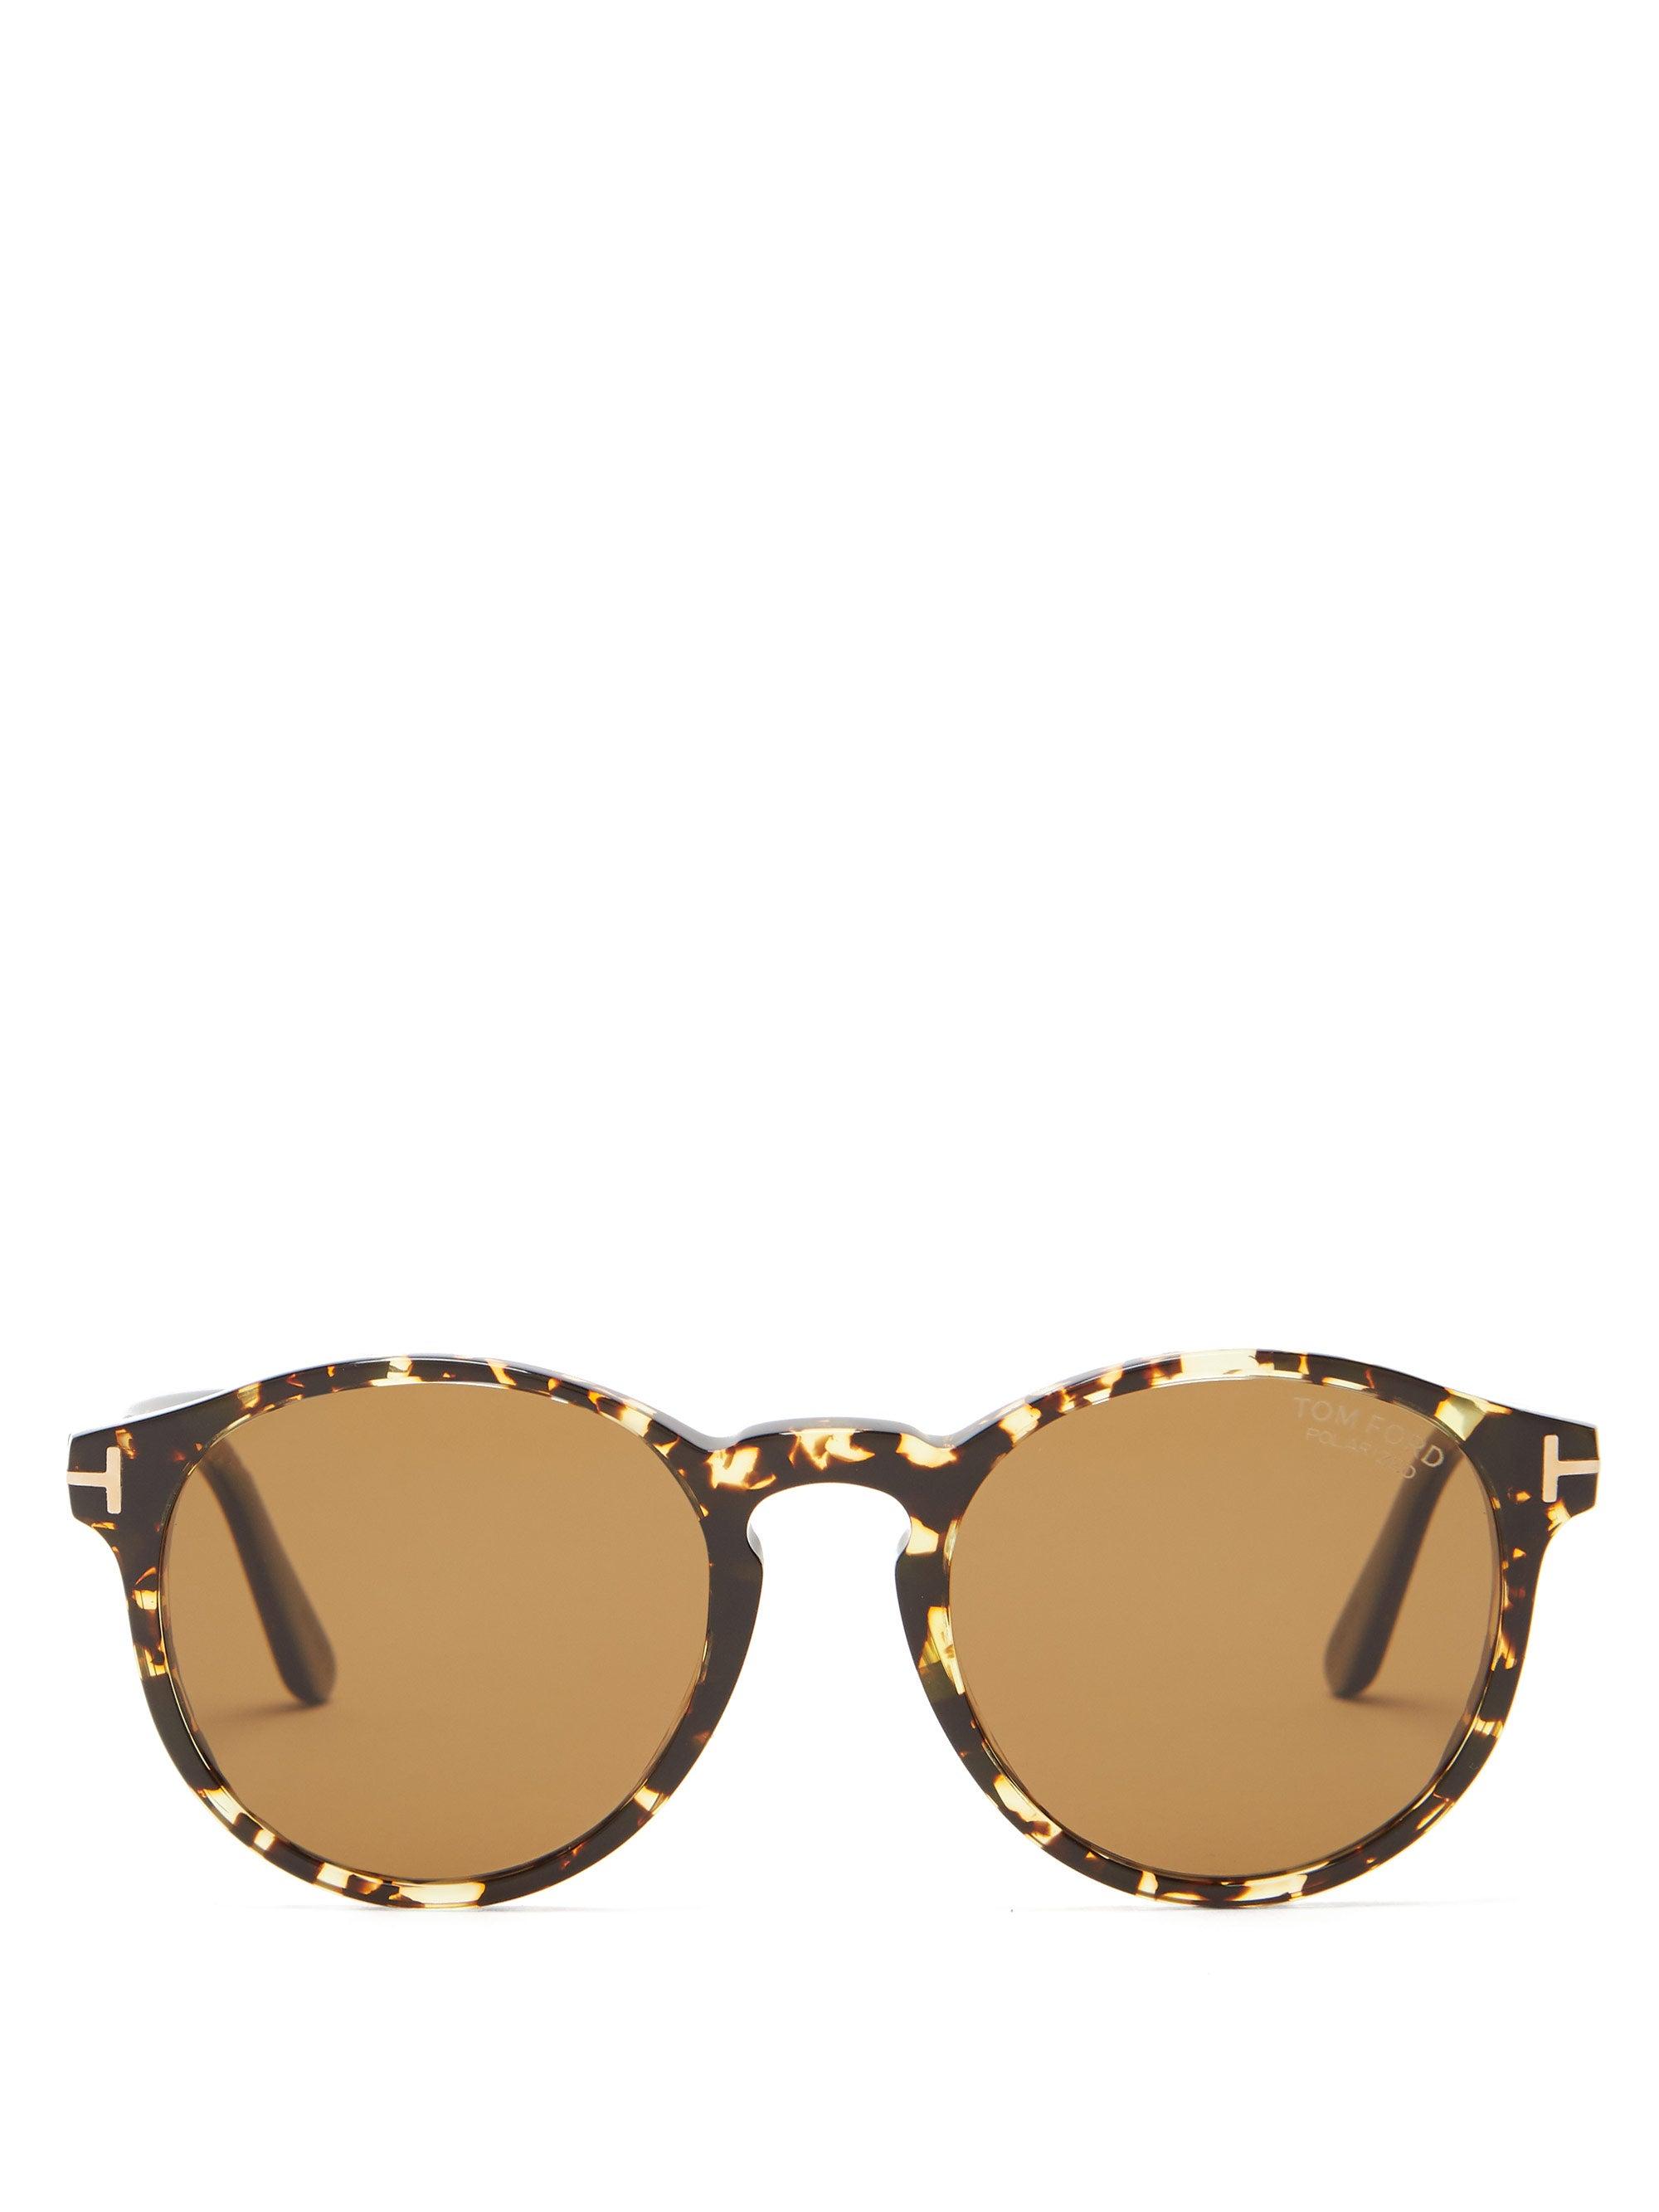 Tom Ford Ian Round Tortoiseshell Acetate Sunglasses In Brown For Men Lyst